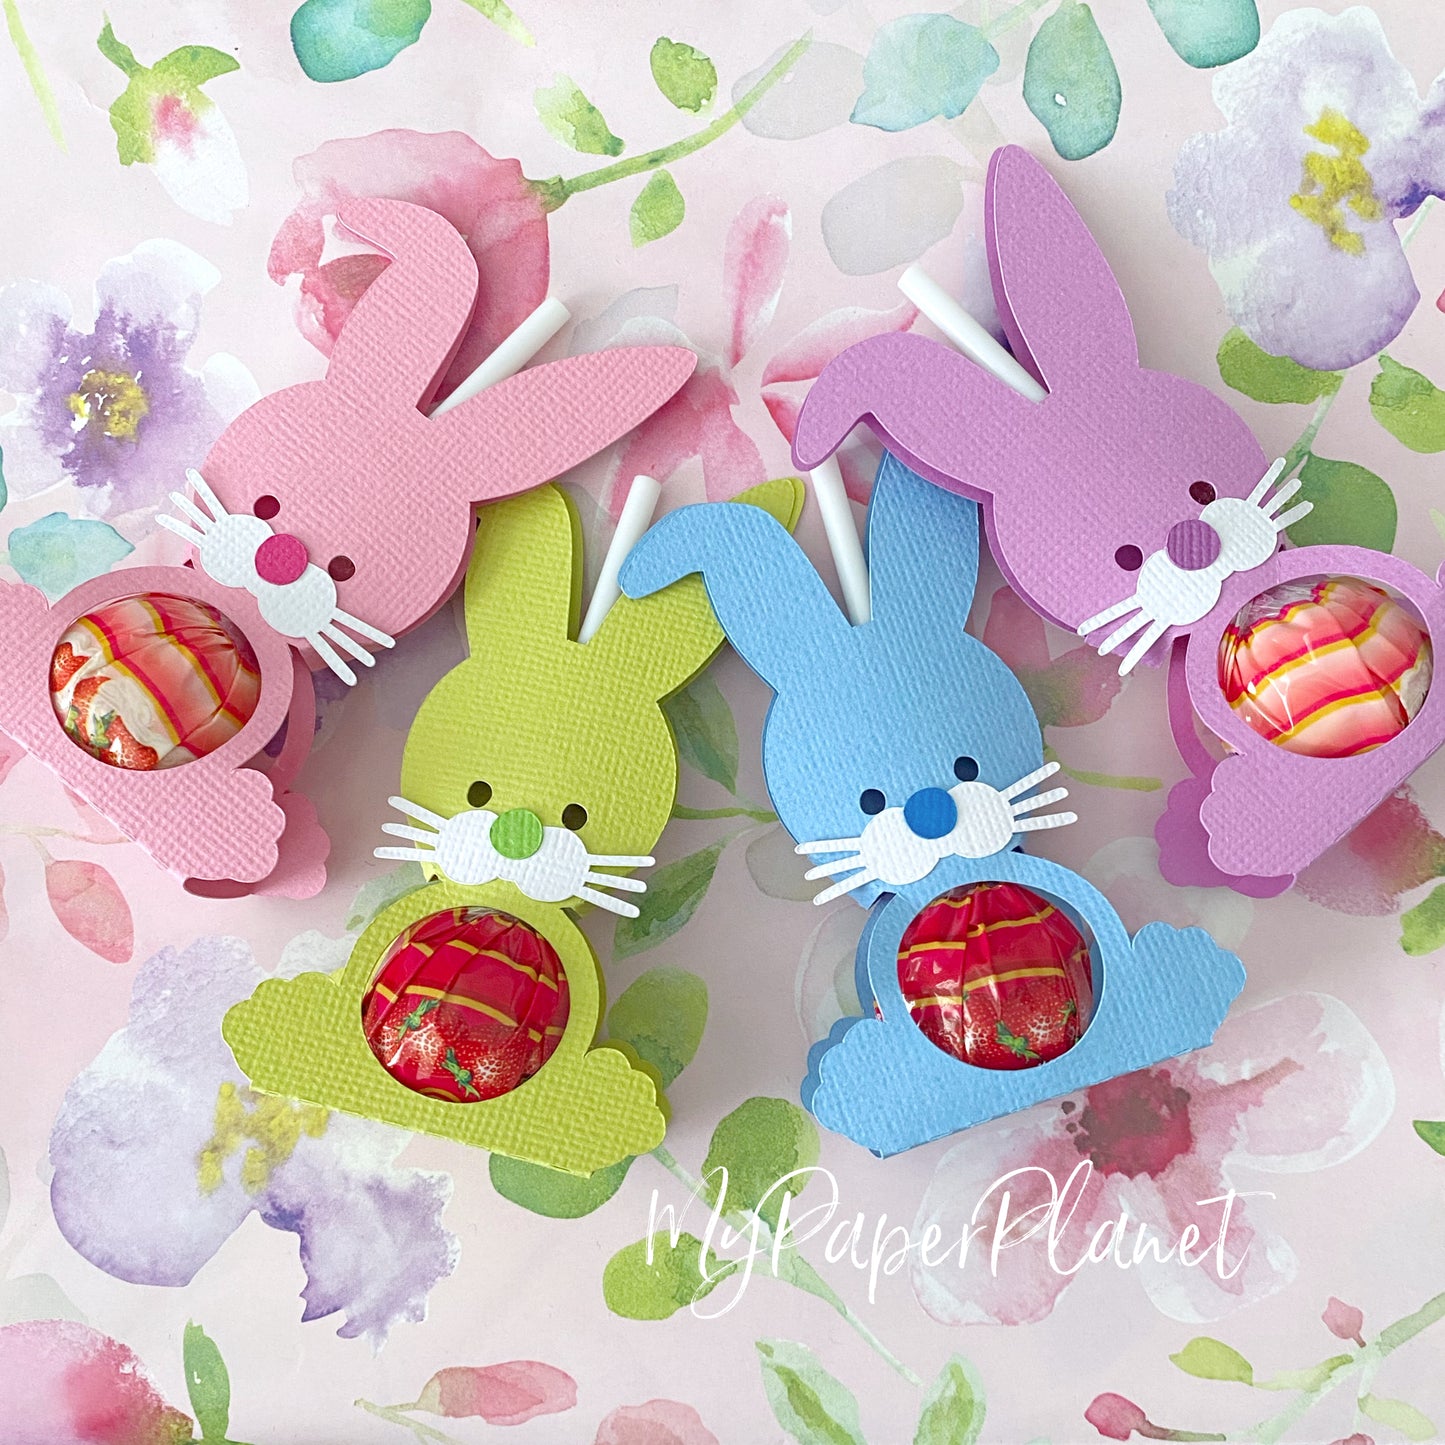 Bunny Rabbit Lollipop holder. Easter chocolate class gifts.